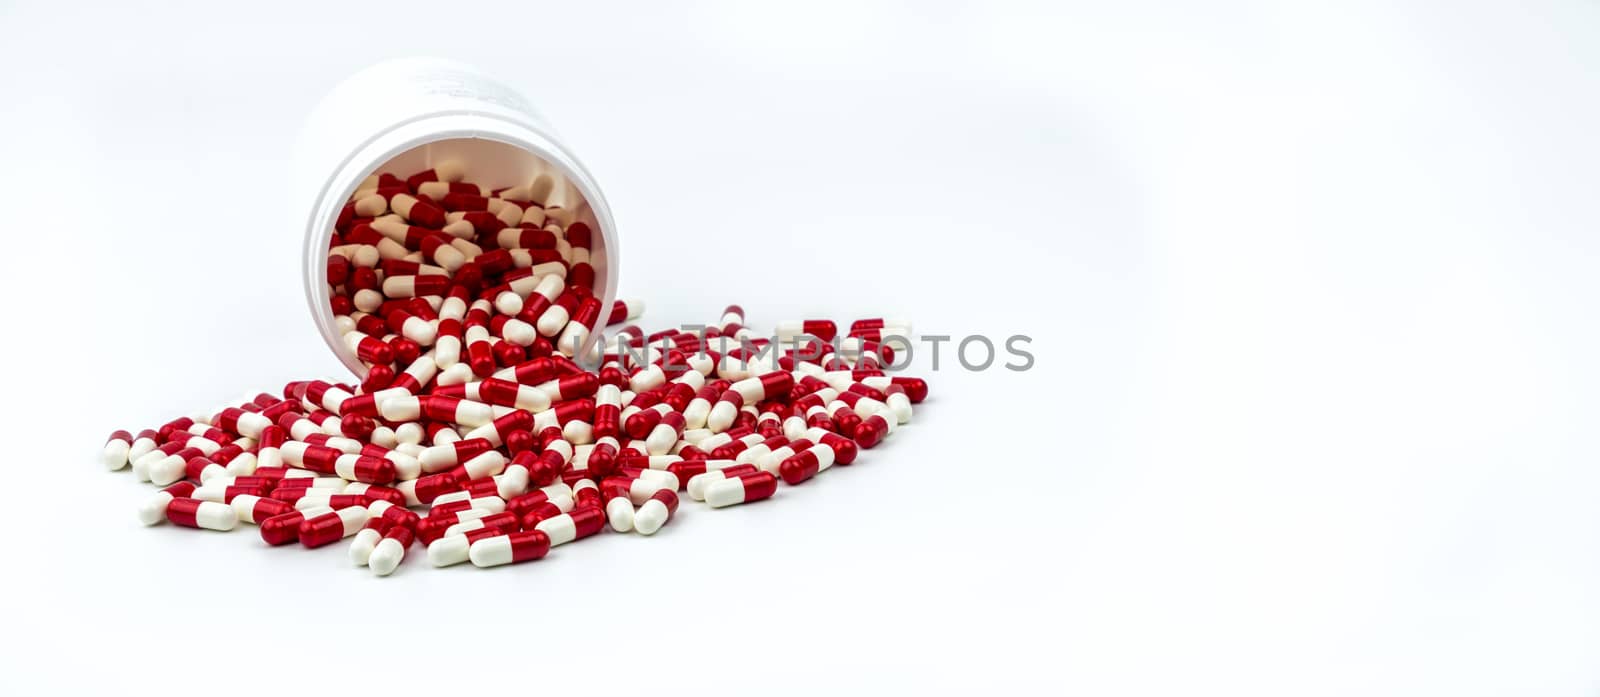 Colorful of antibiotic capsules pills with plastic bottle isolated on white background. Drug resistance, antibiotic drug use with reasonable. Antibiotics drug overuse. Pharmaceutical industry. Pharmacy background.